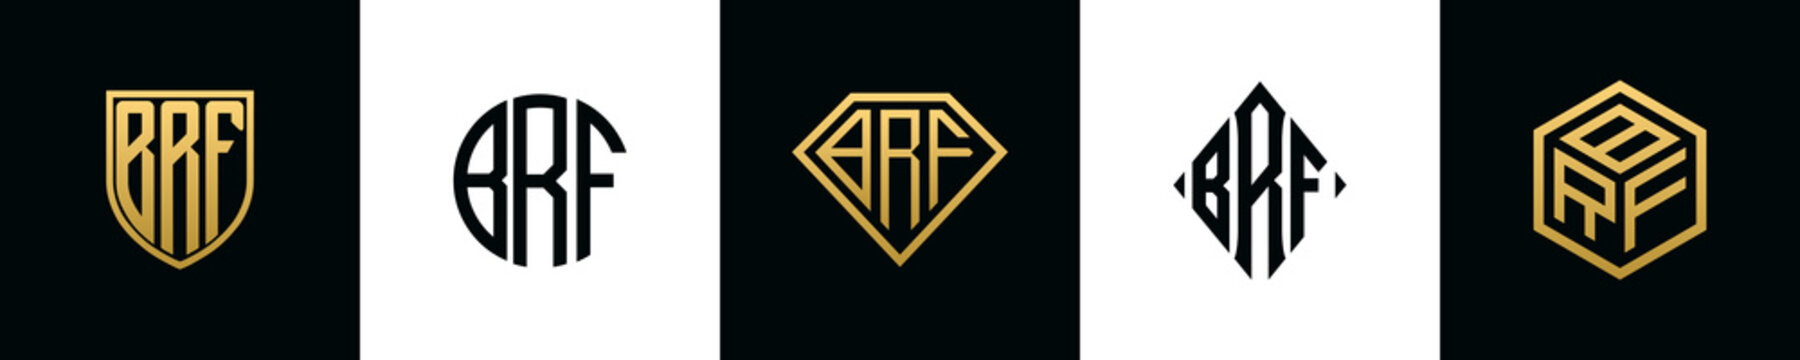 Initial letters BRF logo designs Bundle